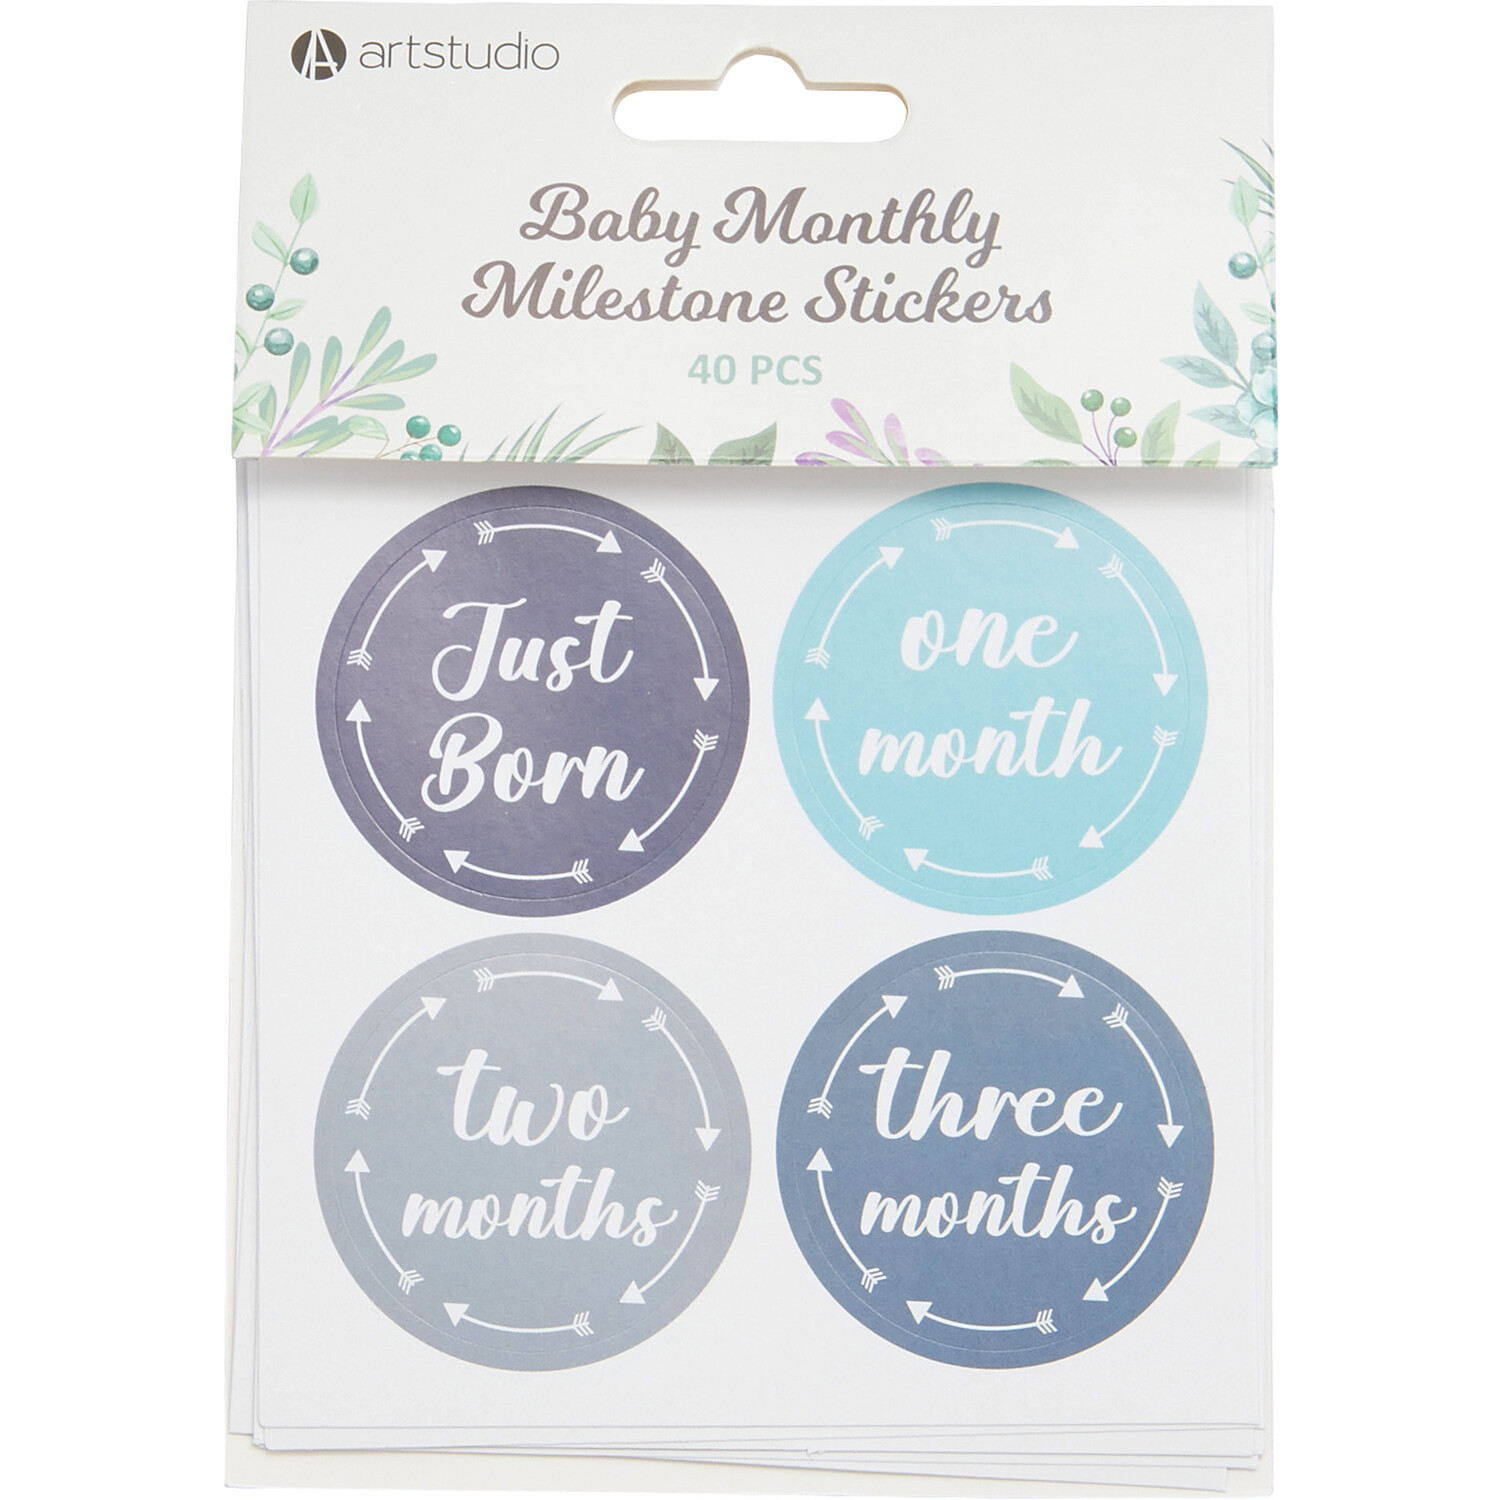 Single Art Studio Baby Monthly Milestone Sticker 40 Pack in Assorted styles Image 1